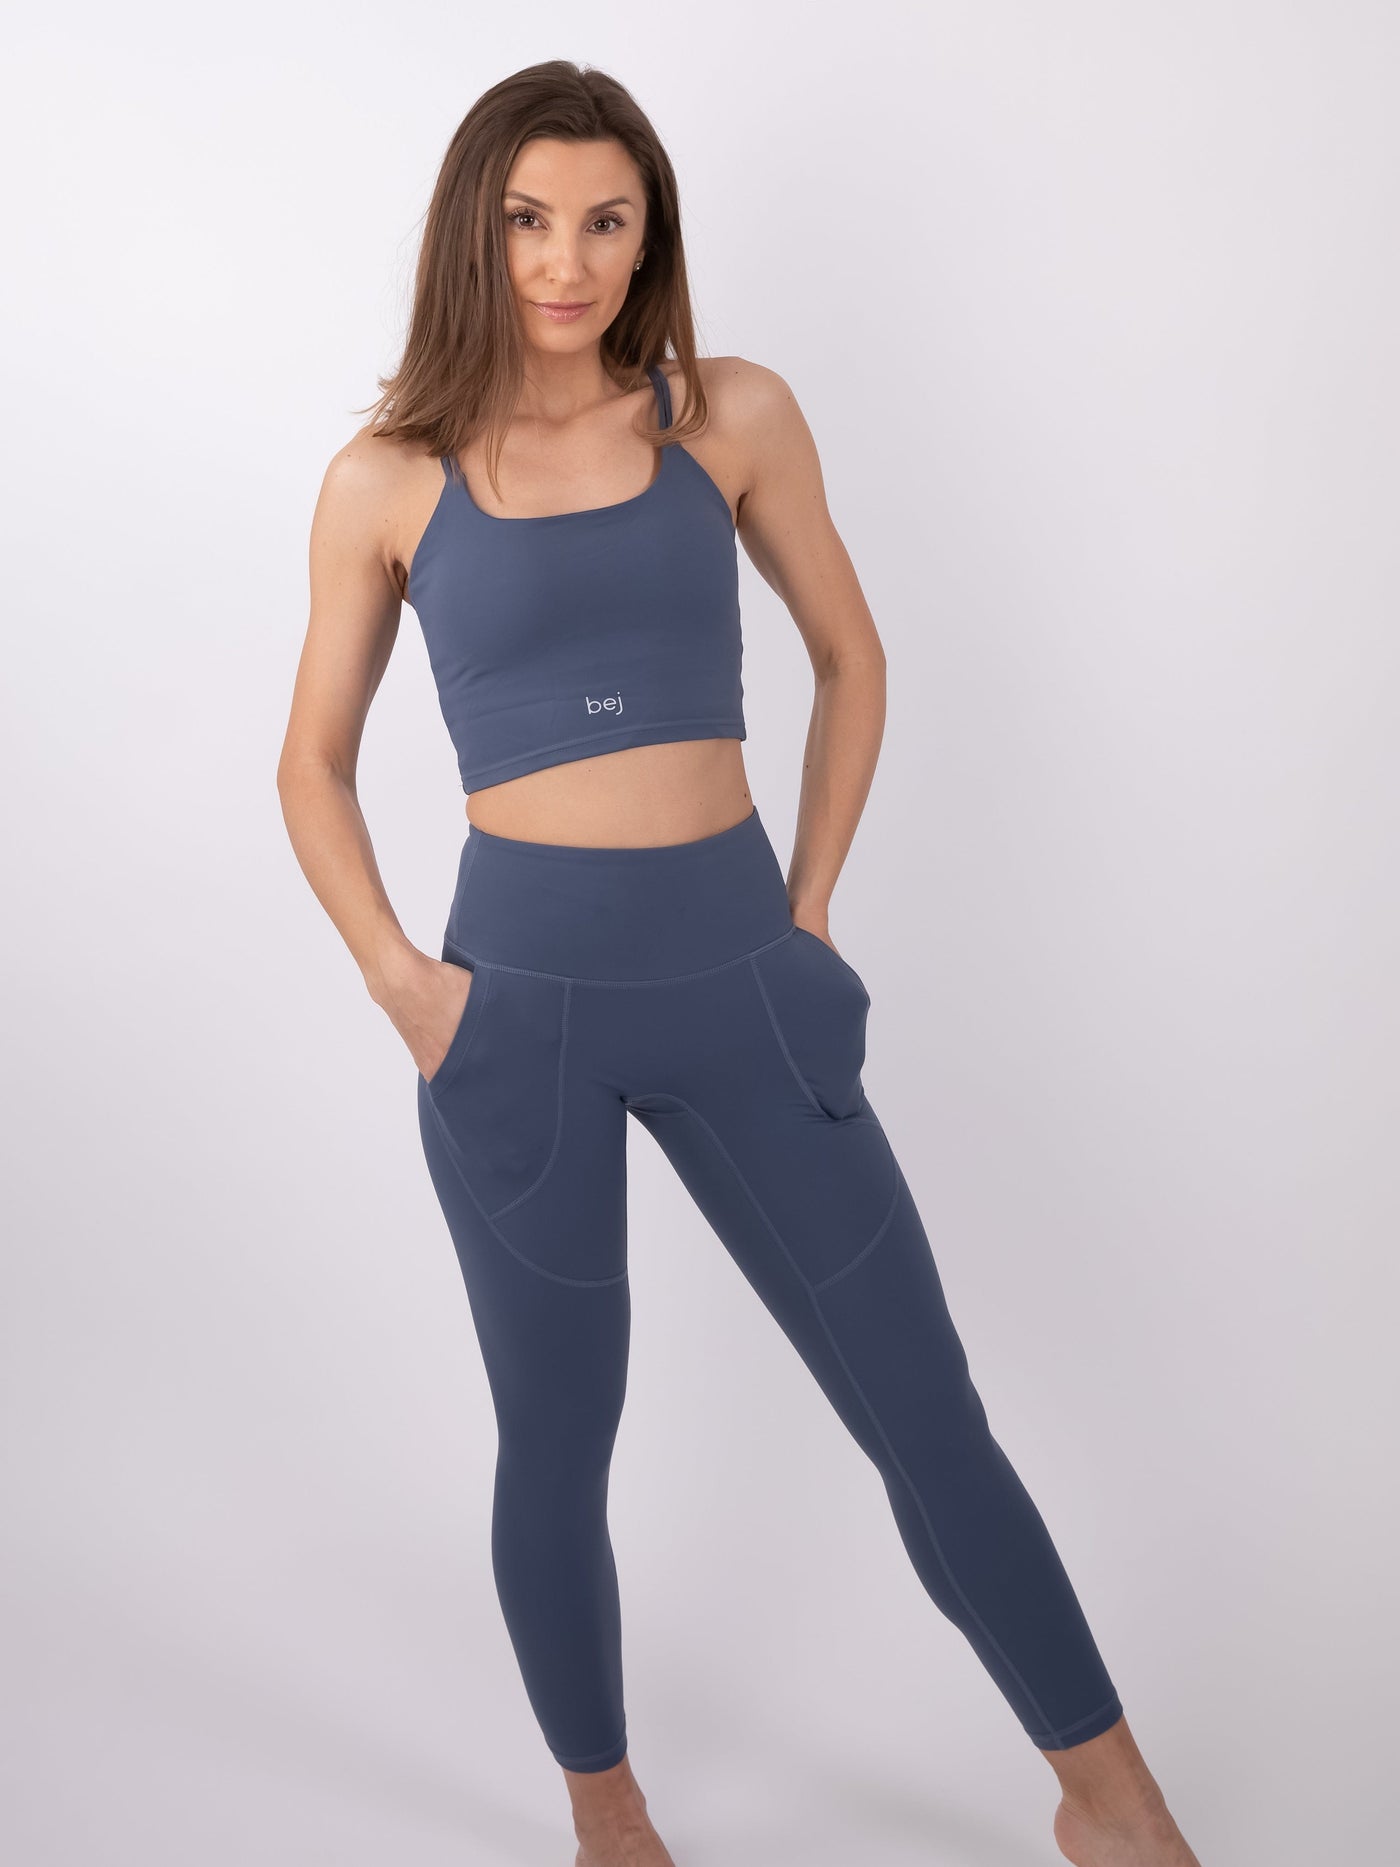 Warm Blue Legging - Shop women's workout apparel online | Leggings, hoodies, Top & bras | bejactive